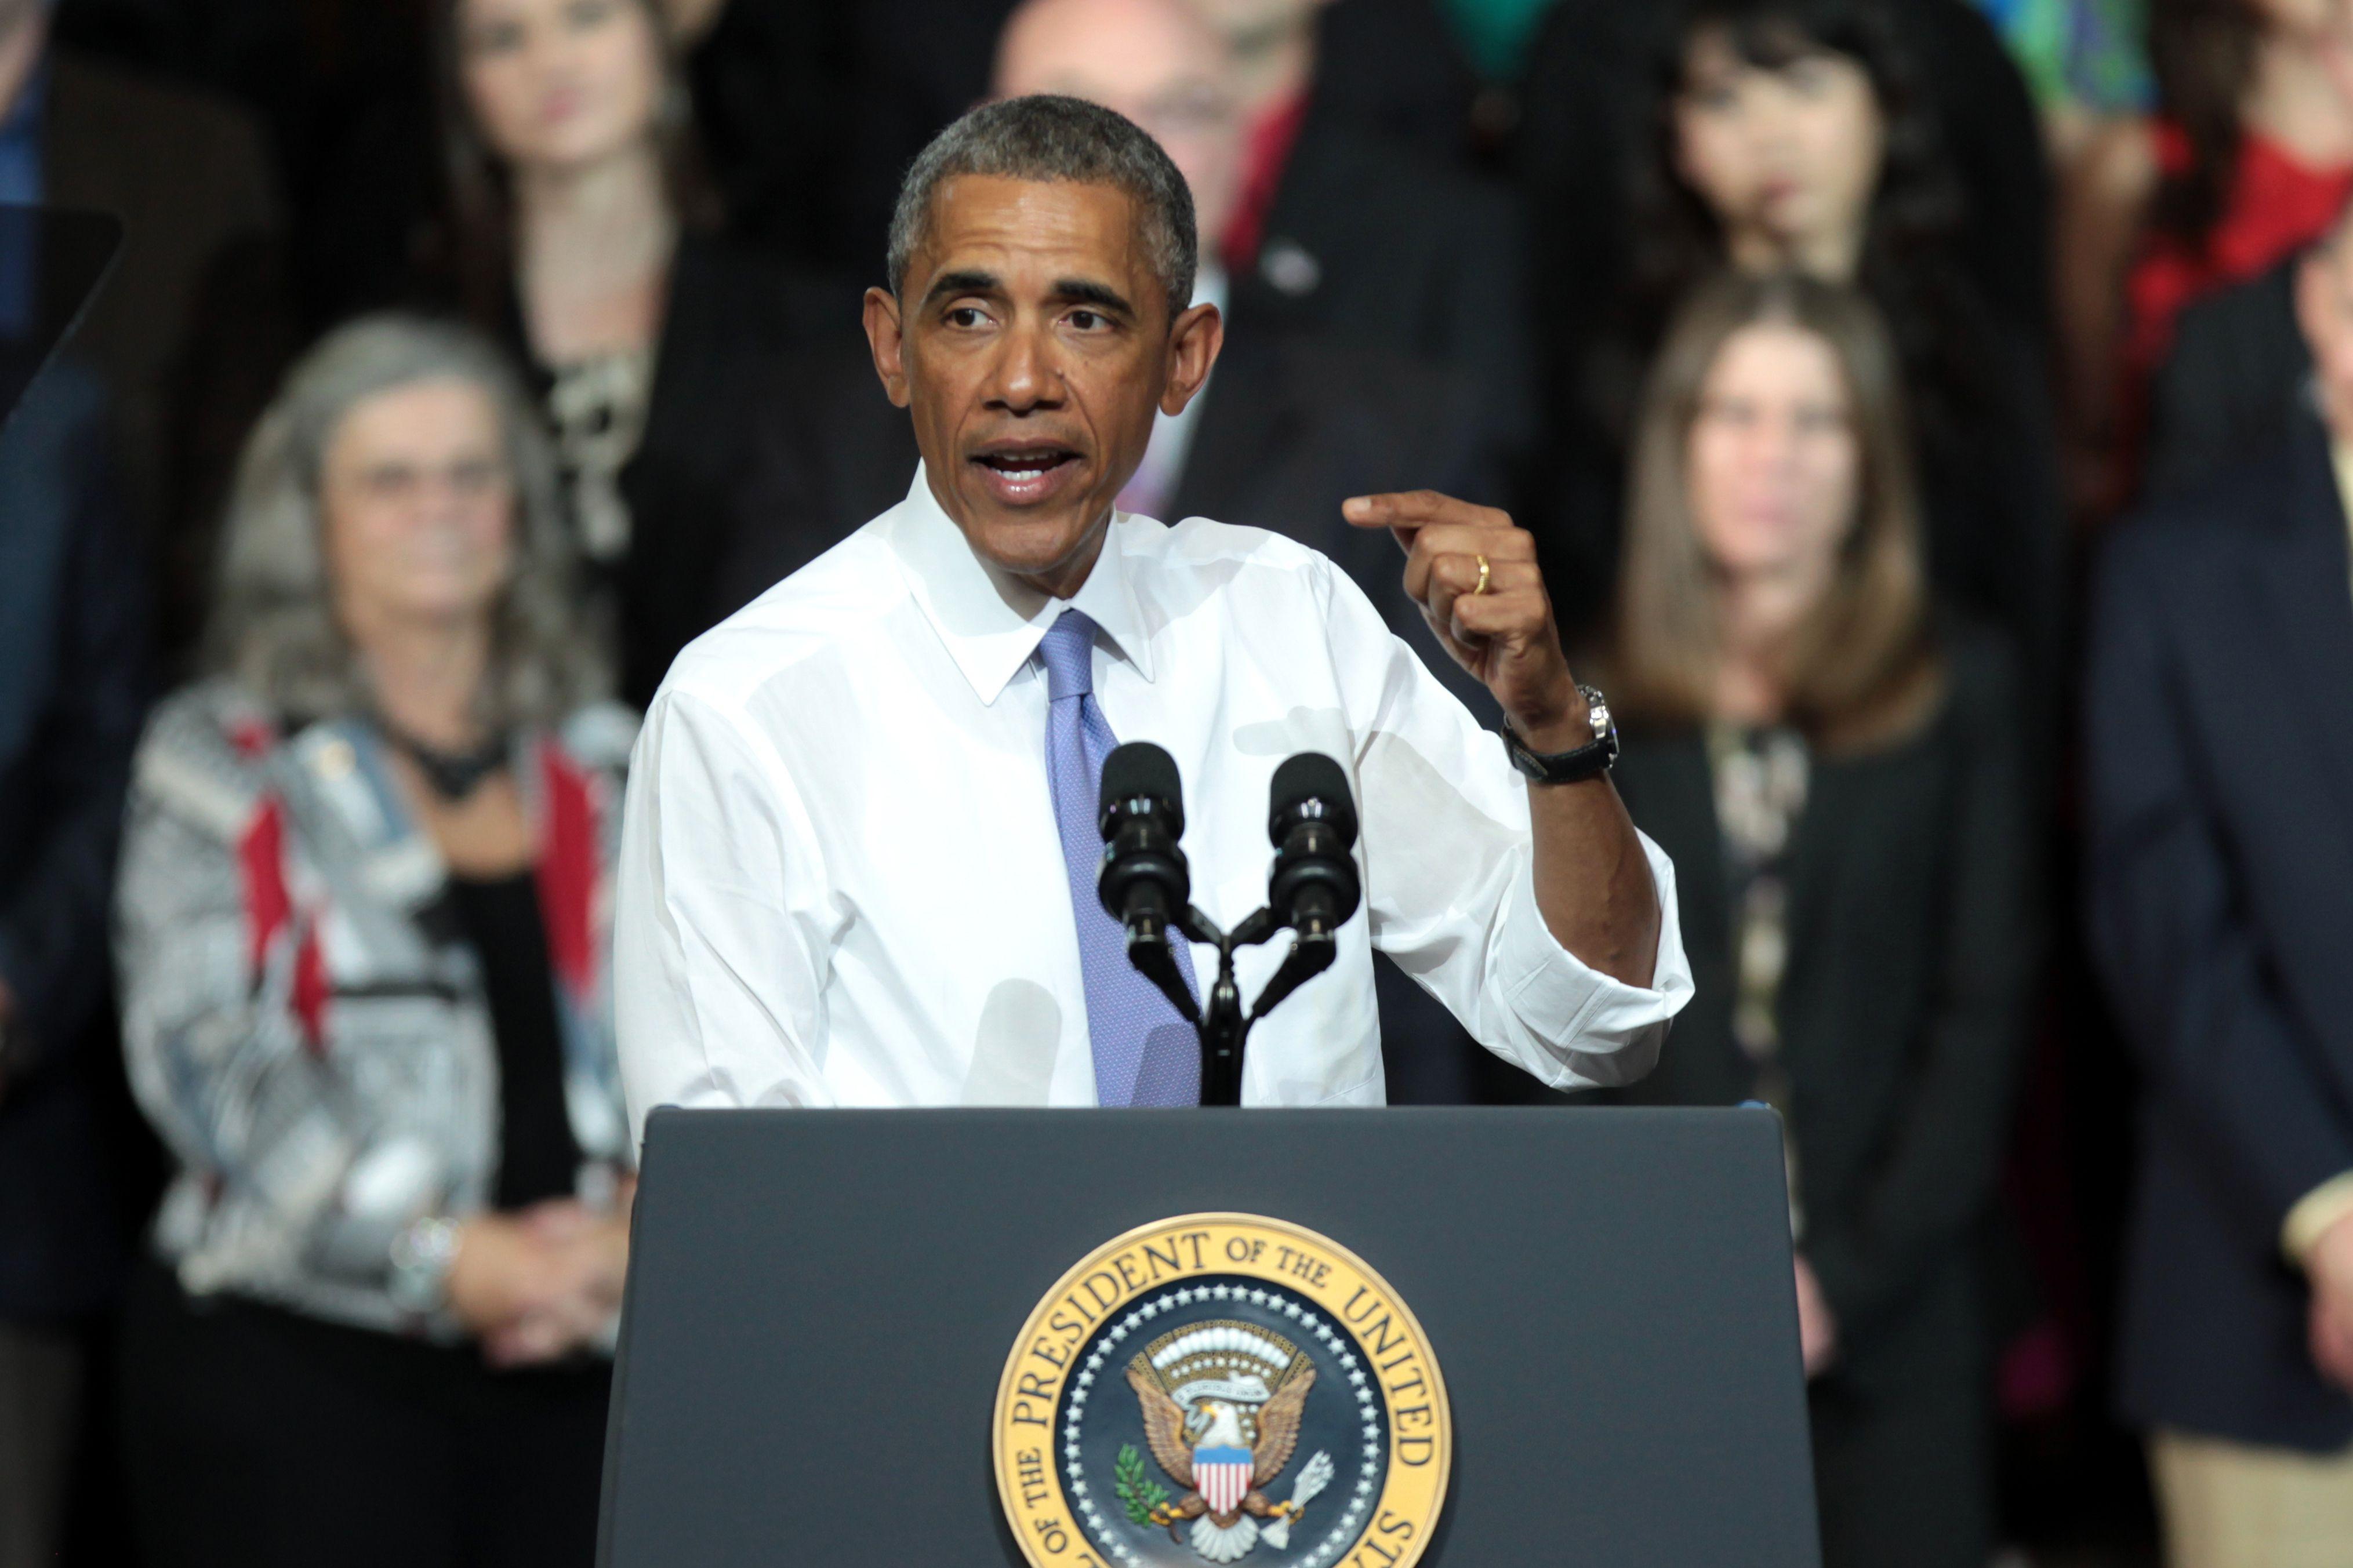 Barack Obama Wallpaper Image Photo Picture Background